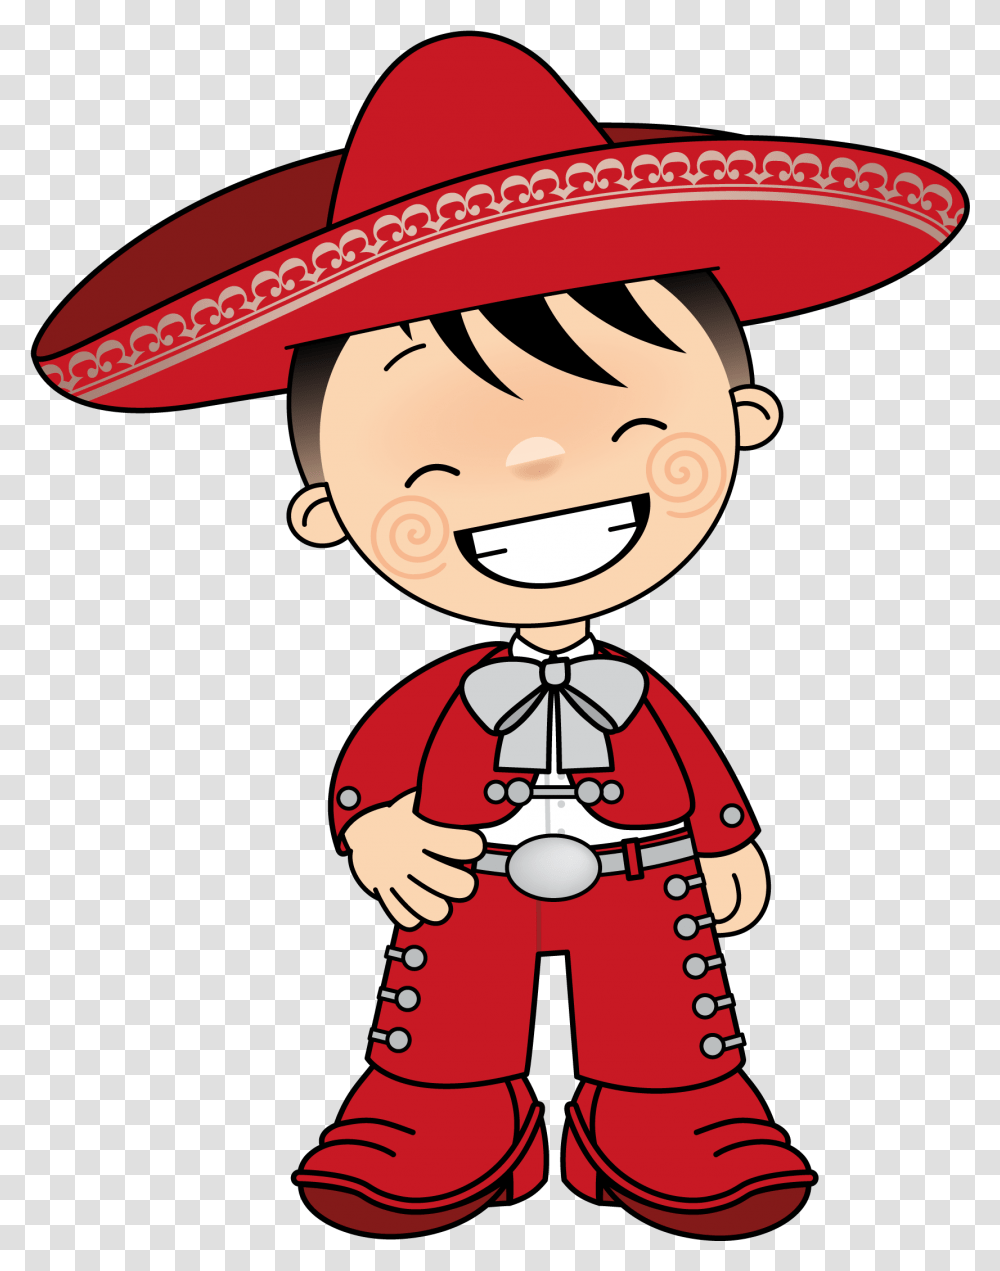 Clip Art Mexican Man With Mustache Charros Mexicanos Animados, Apparel, Sombrero, Hat Transparent Png